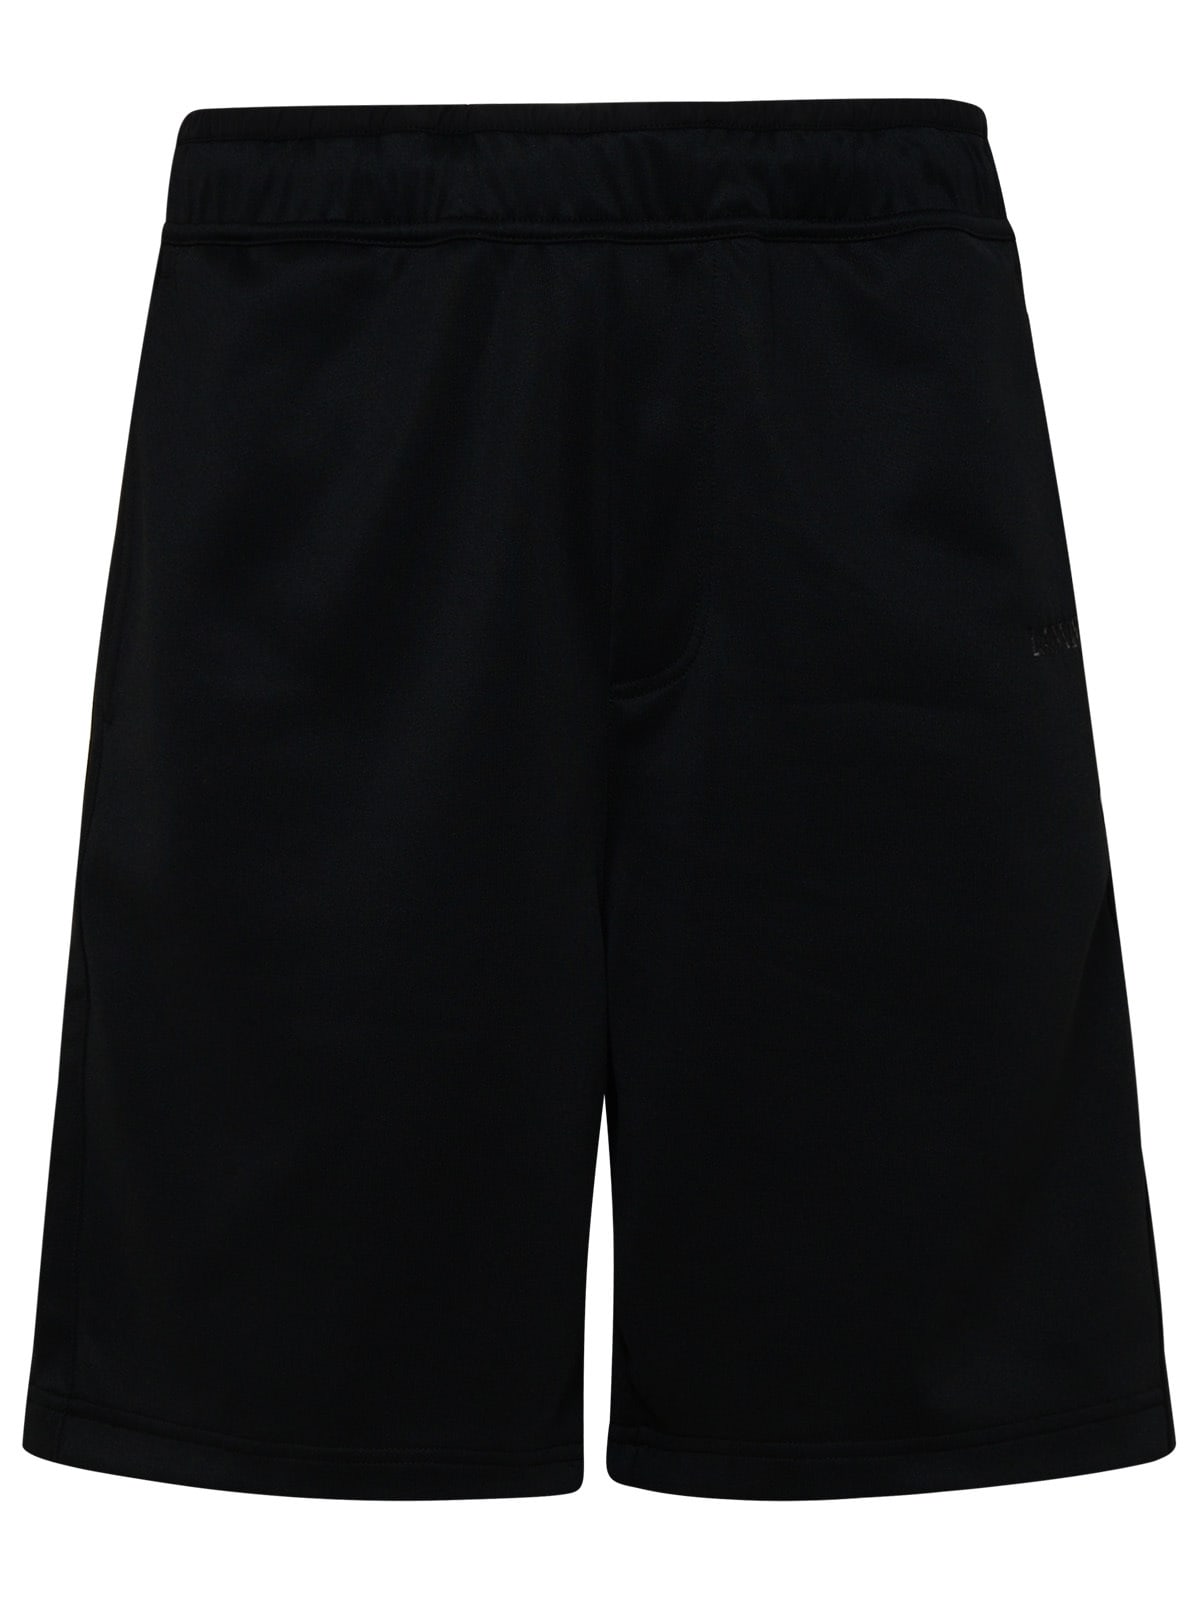 Black Cotton Blend Bermuda Shorts